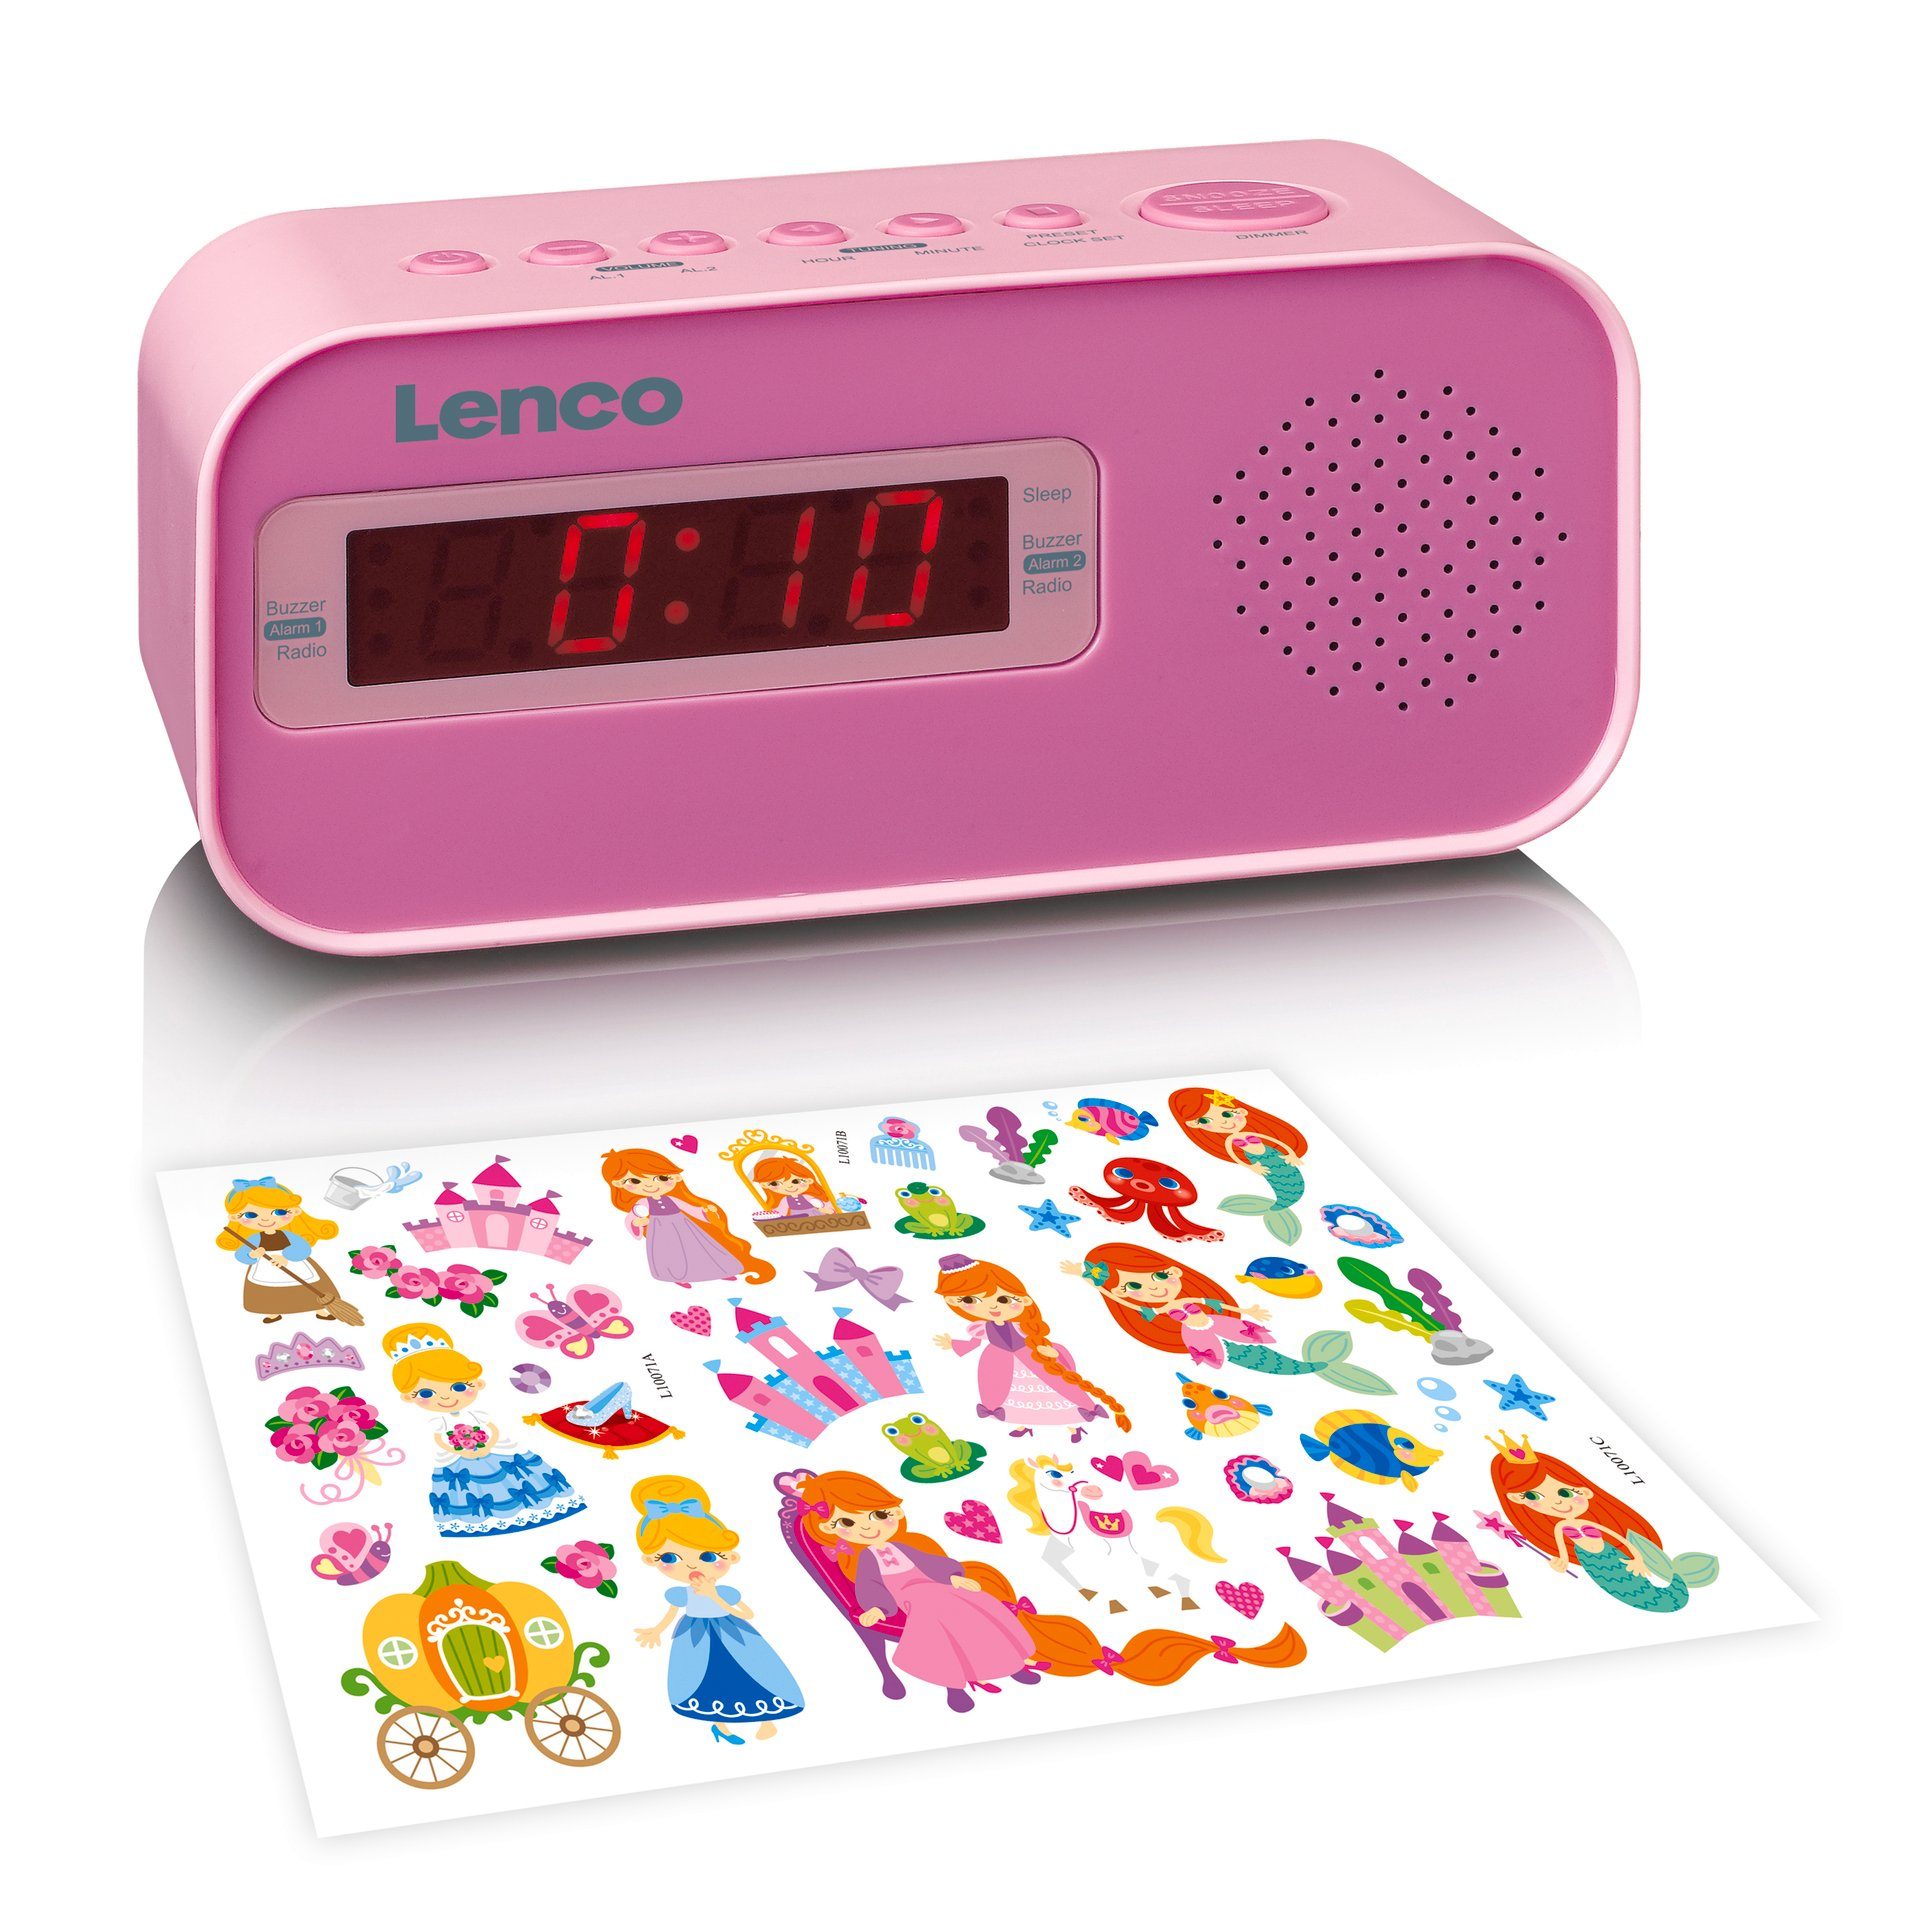 (FM-Tuner) Lenco Rosa Uhrenradio CR-205